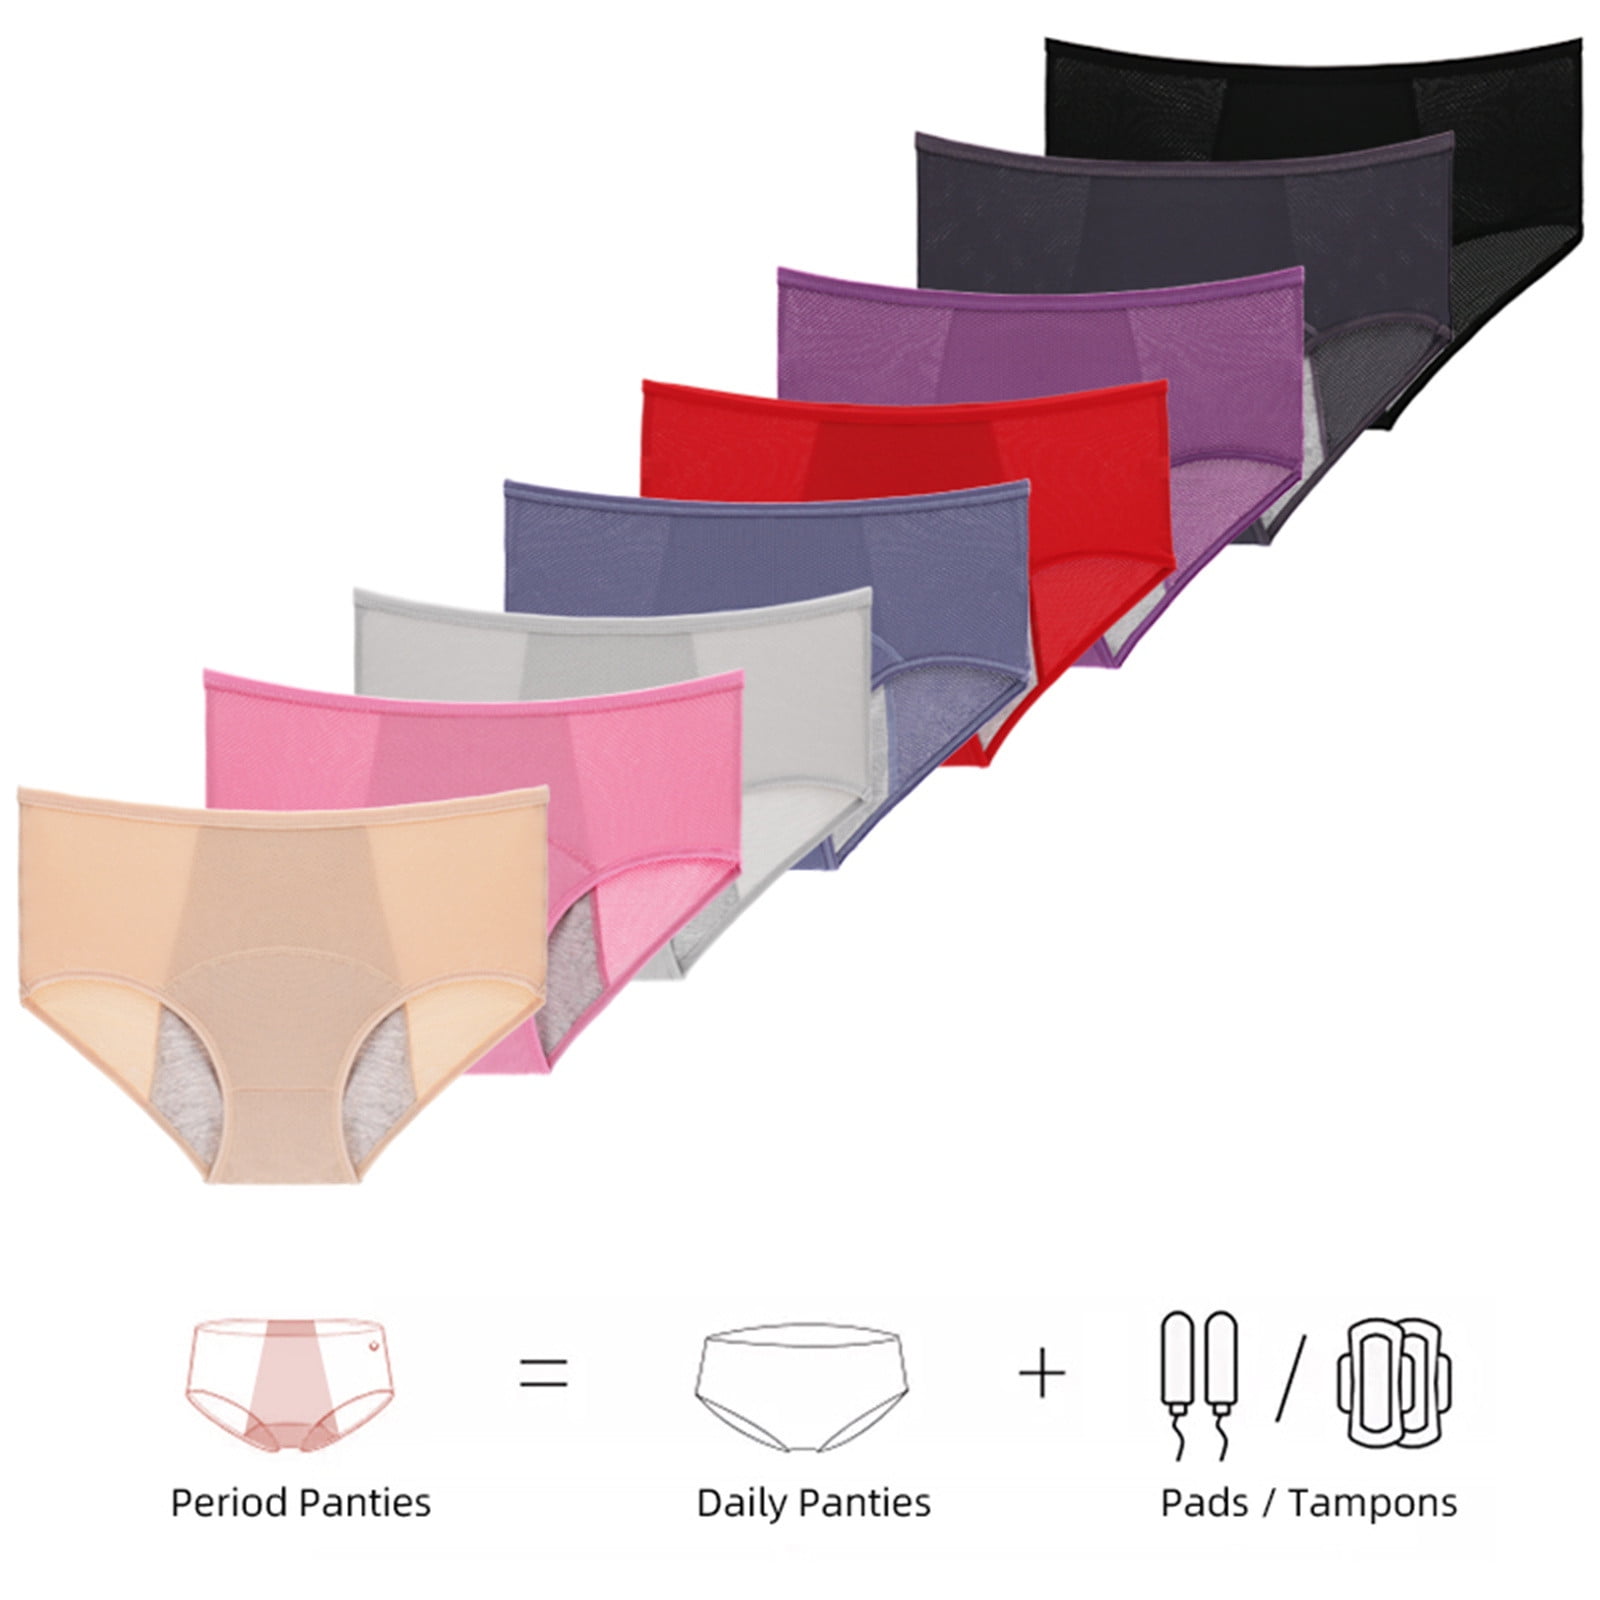 B2BODY Women's Panties Microfiber Silicone Edge Hipsters XS-3X Plus Size 